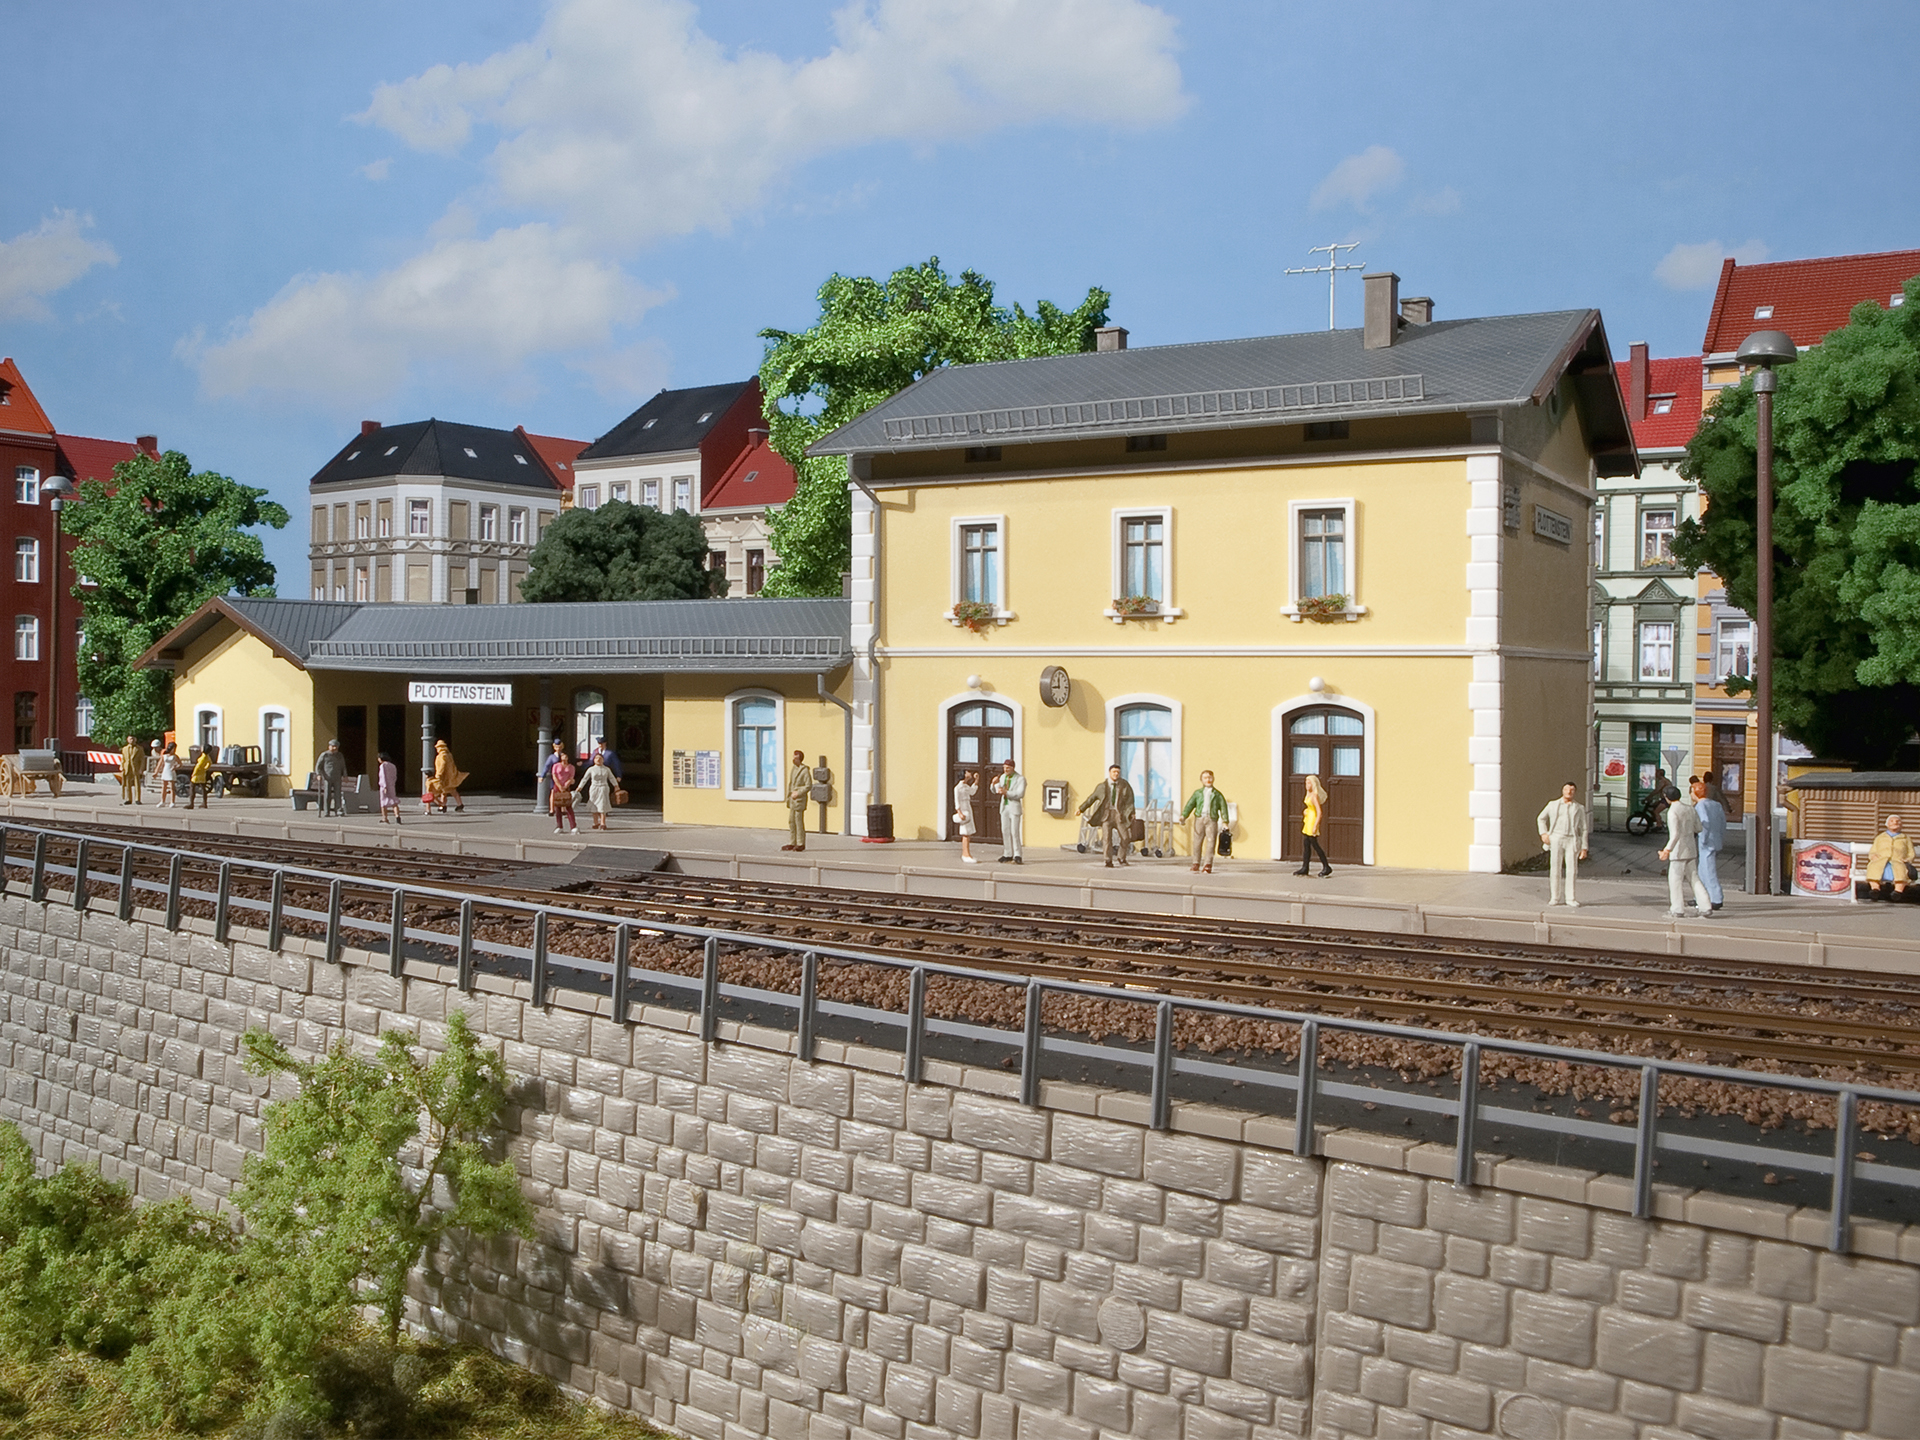 Bahnhof Plottenstein